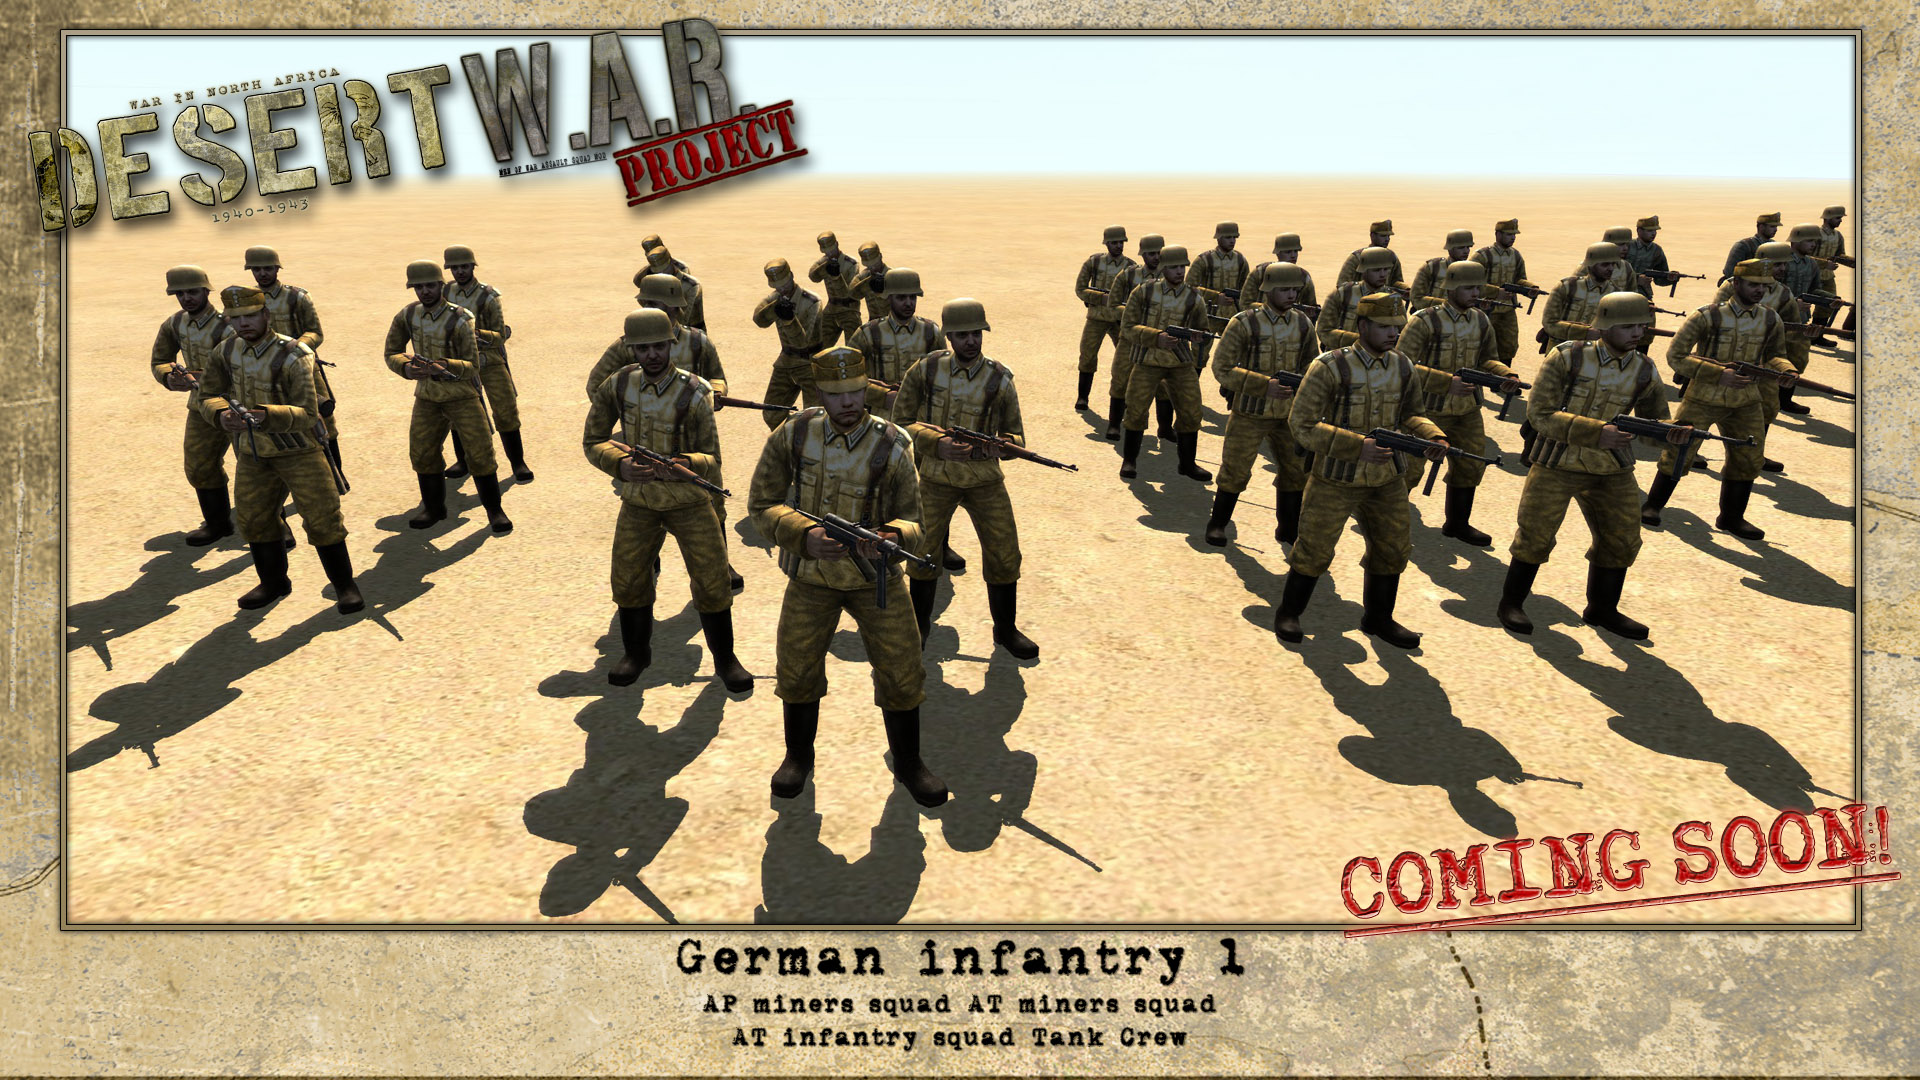 men of war assault squad 1 skirmish mods